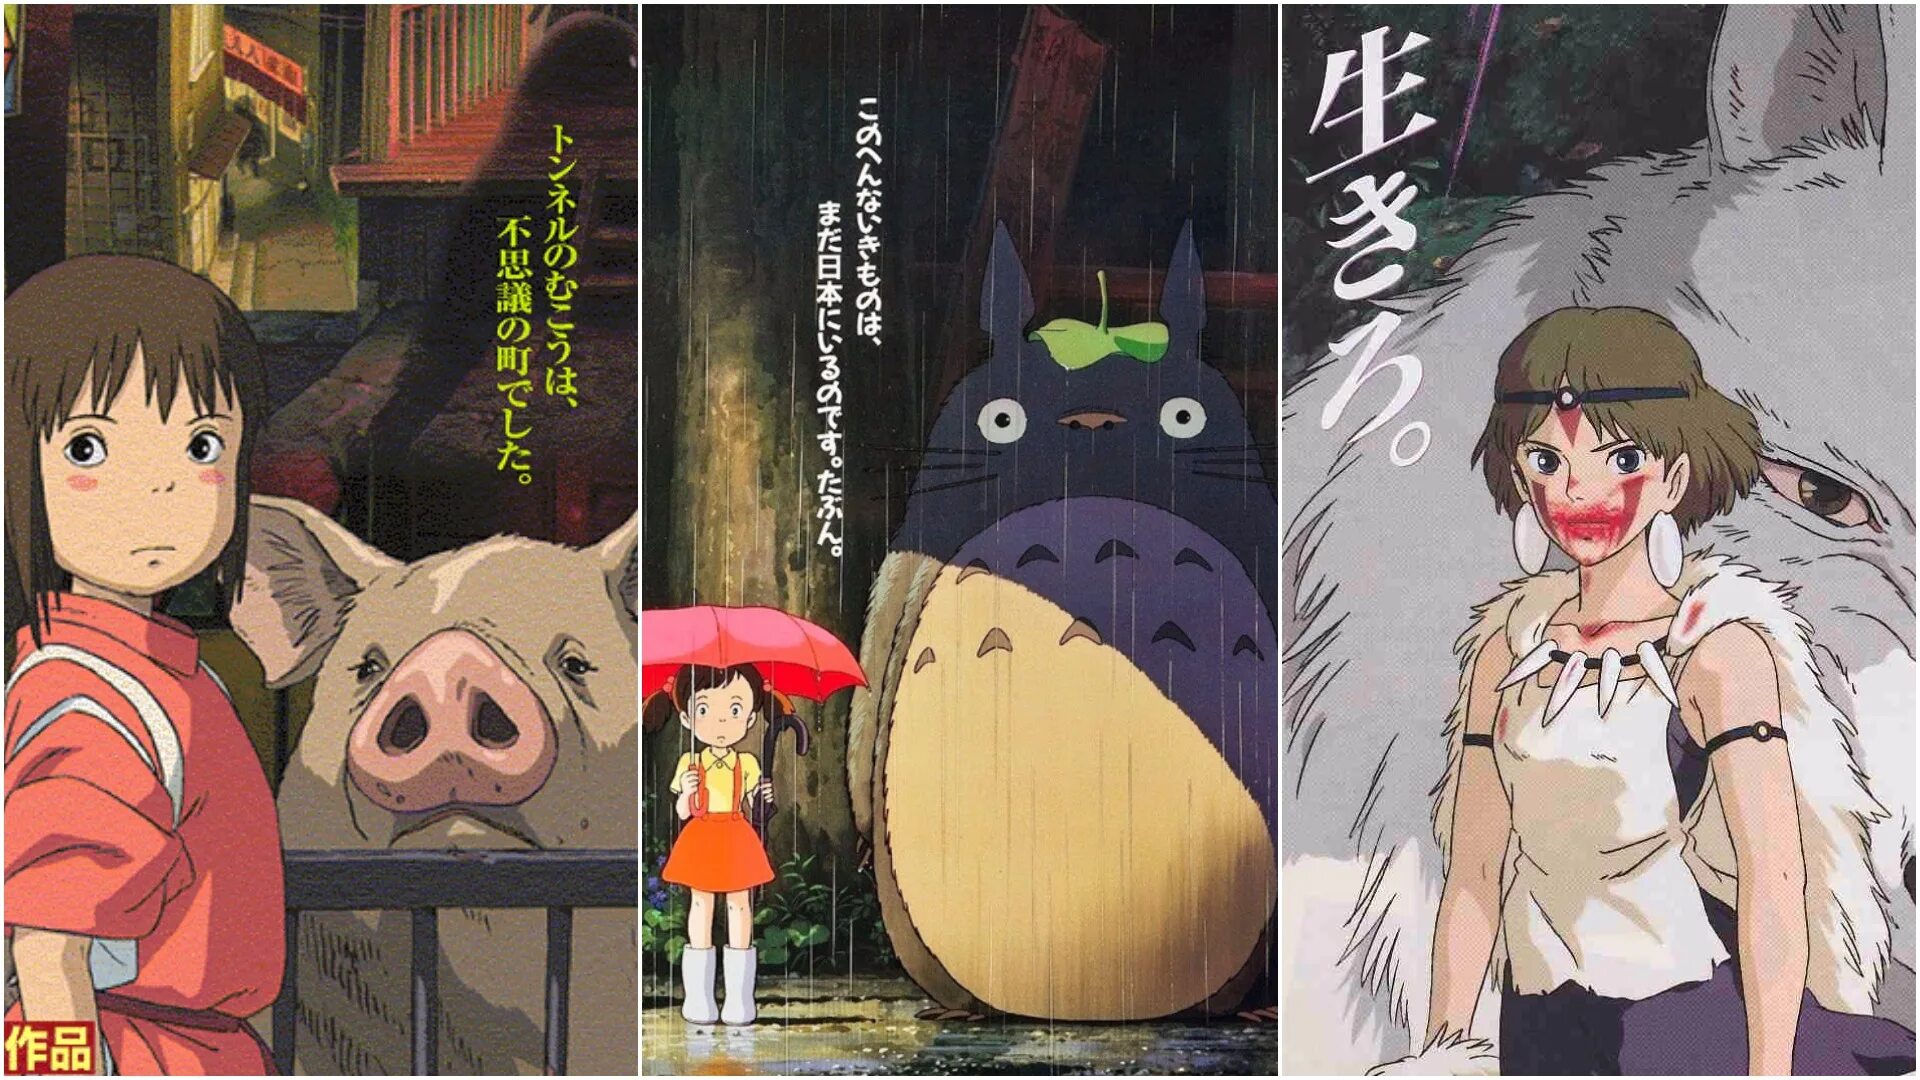 Шигесато Итои. Ghibli mother. А итое житое aij.